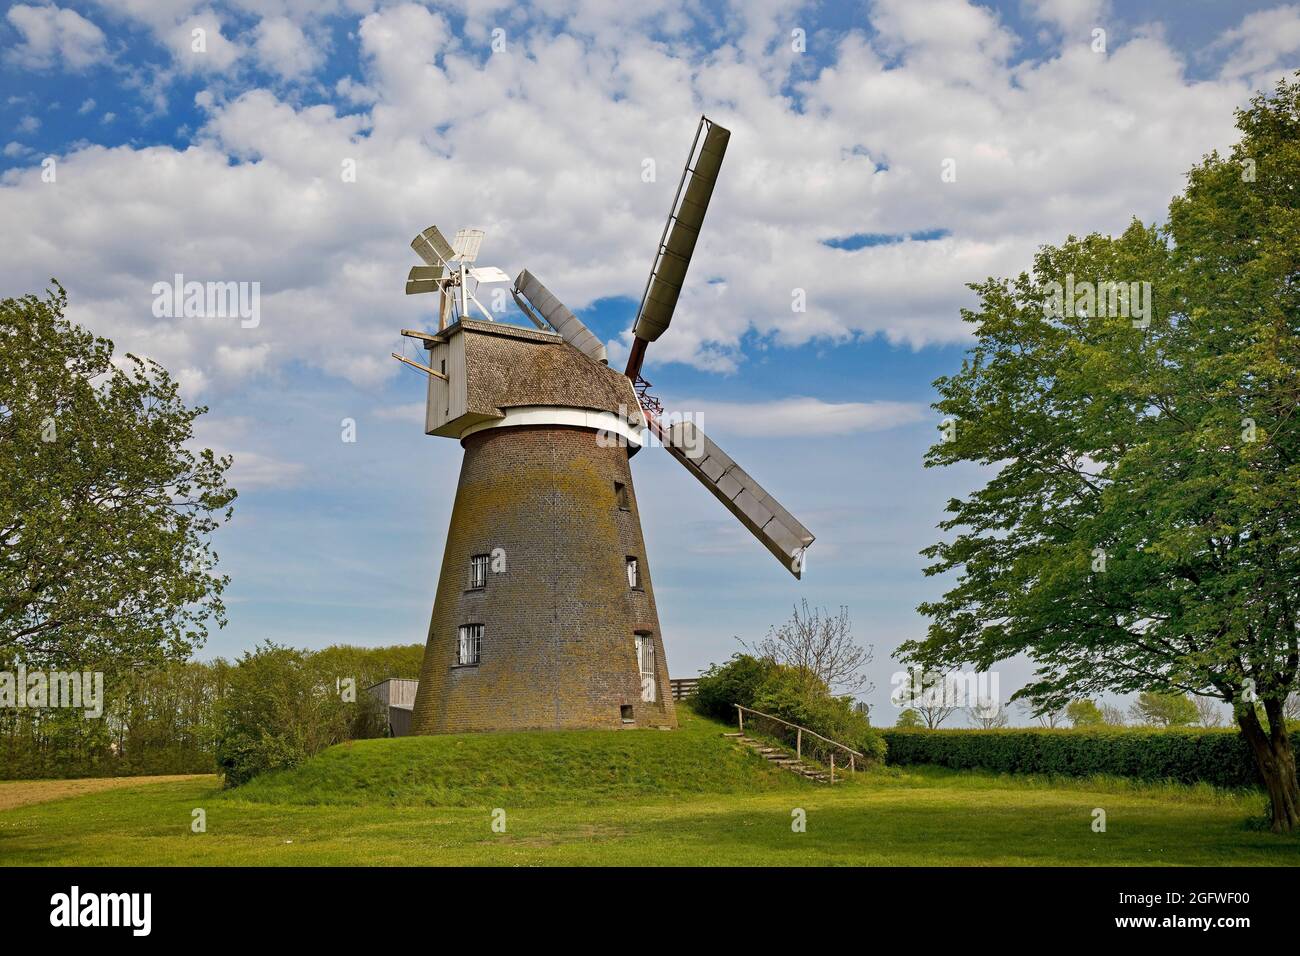 Museum windmill in Breberer, Selfkant-Muehlenstrasse, Germany, North Rhine-Westphalia, Lower Rhine, Gangelt Stock Photo